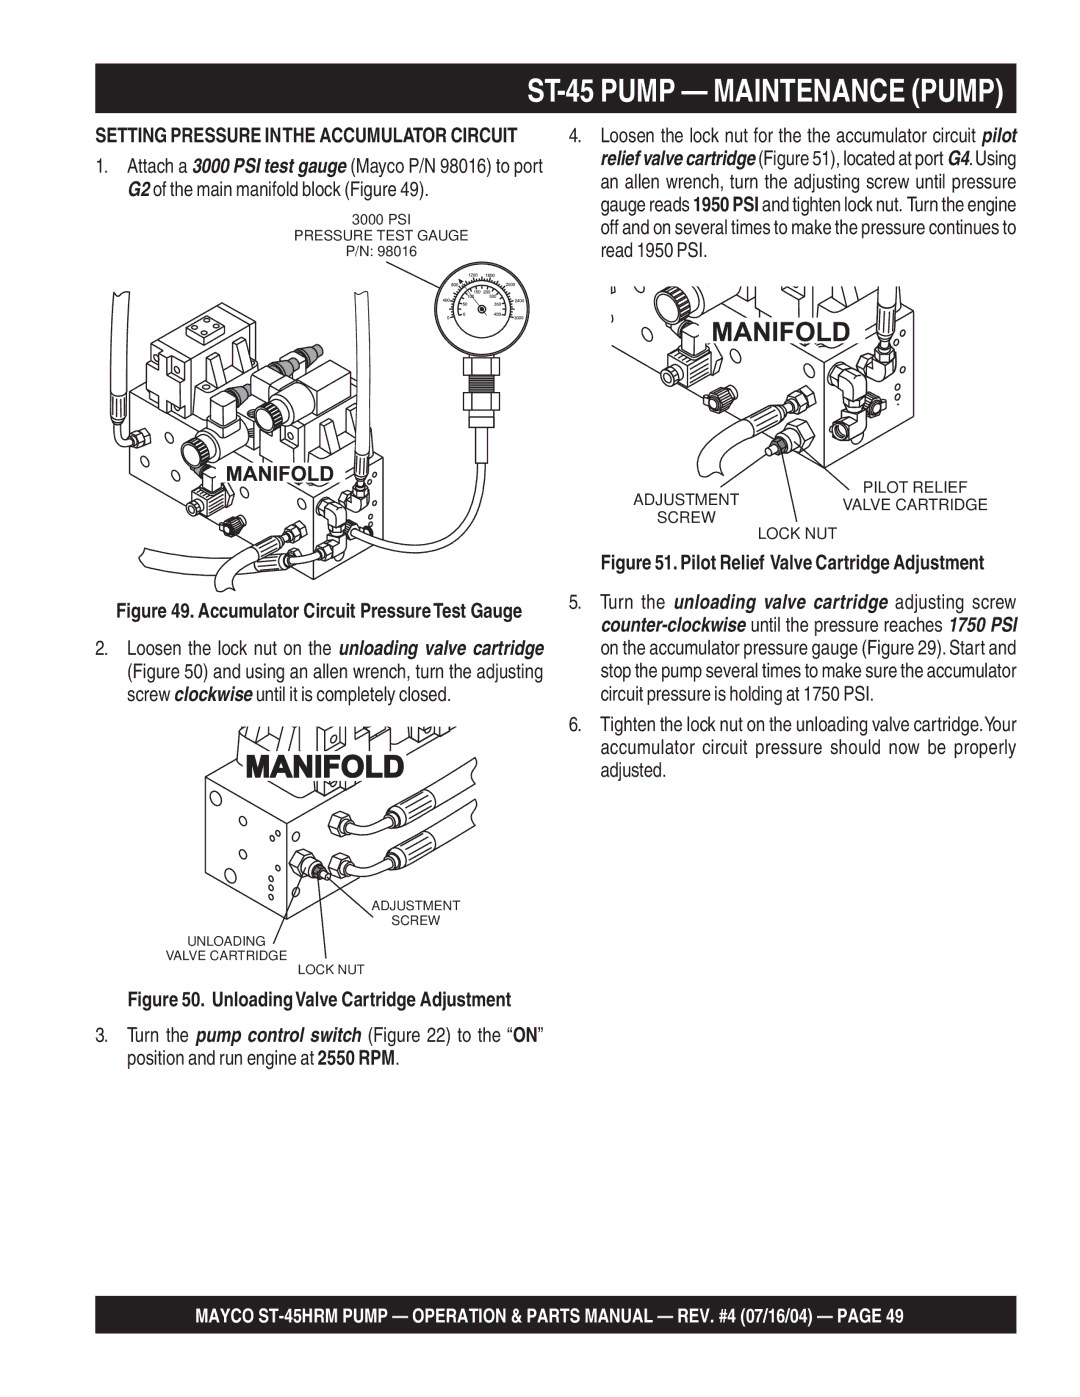 Multiquip ST-45HRM manual Pilot Relief Valve Cartridge Adjustment 